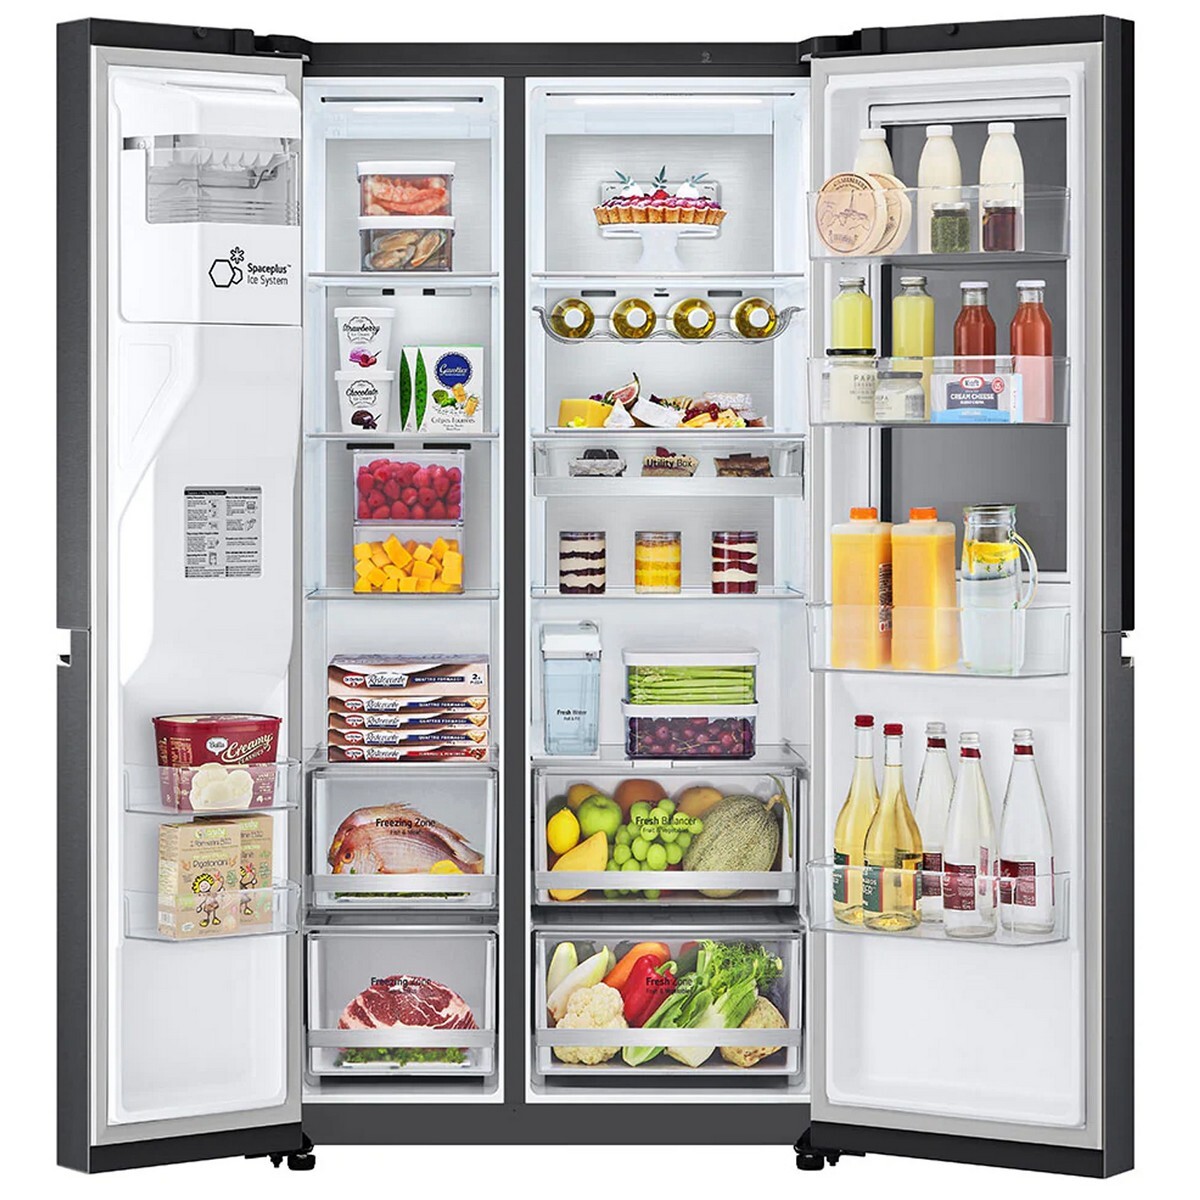 LG Side by Side Refrigerator GC-X257CQES 674 Ltr